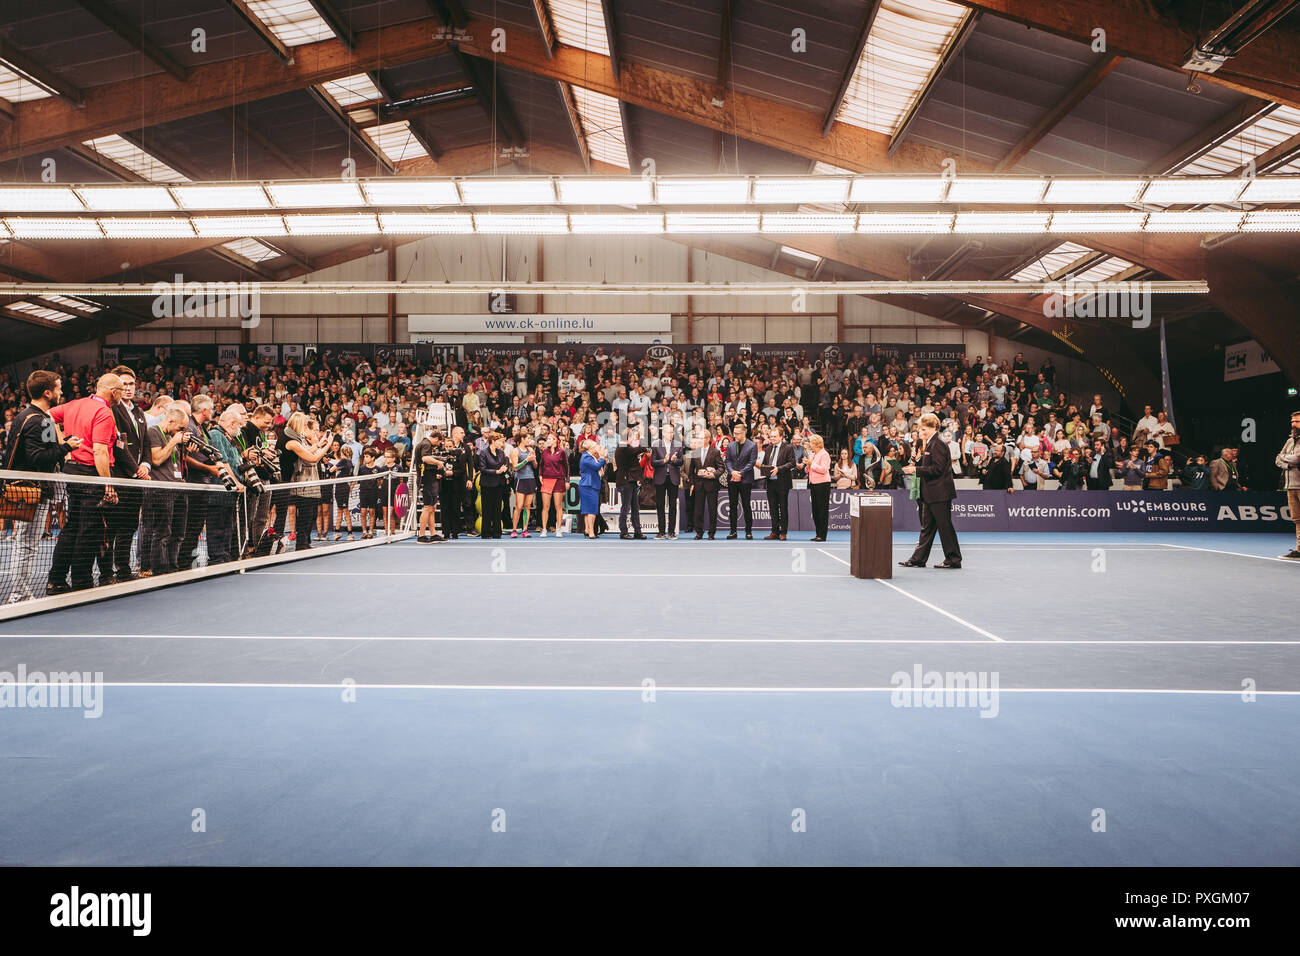 Luxemburg/Luxemburg, 20. Oktober 2018: WTA-BGL BNPPARIBAS Luxemburg open-Finale zwischen Julia Görges und belinda Bencic Stockfoto